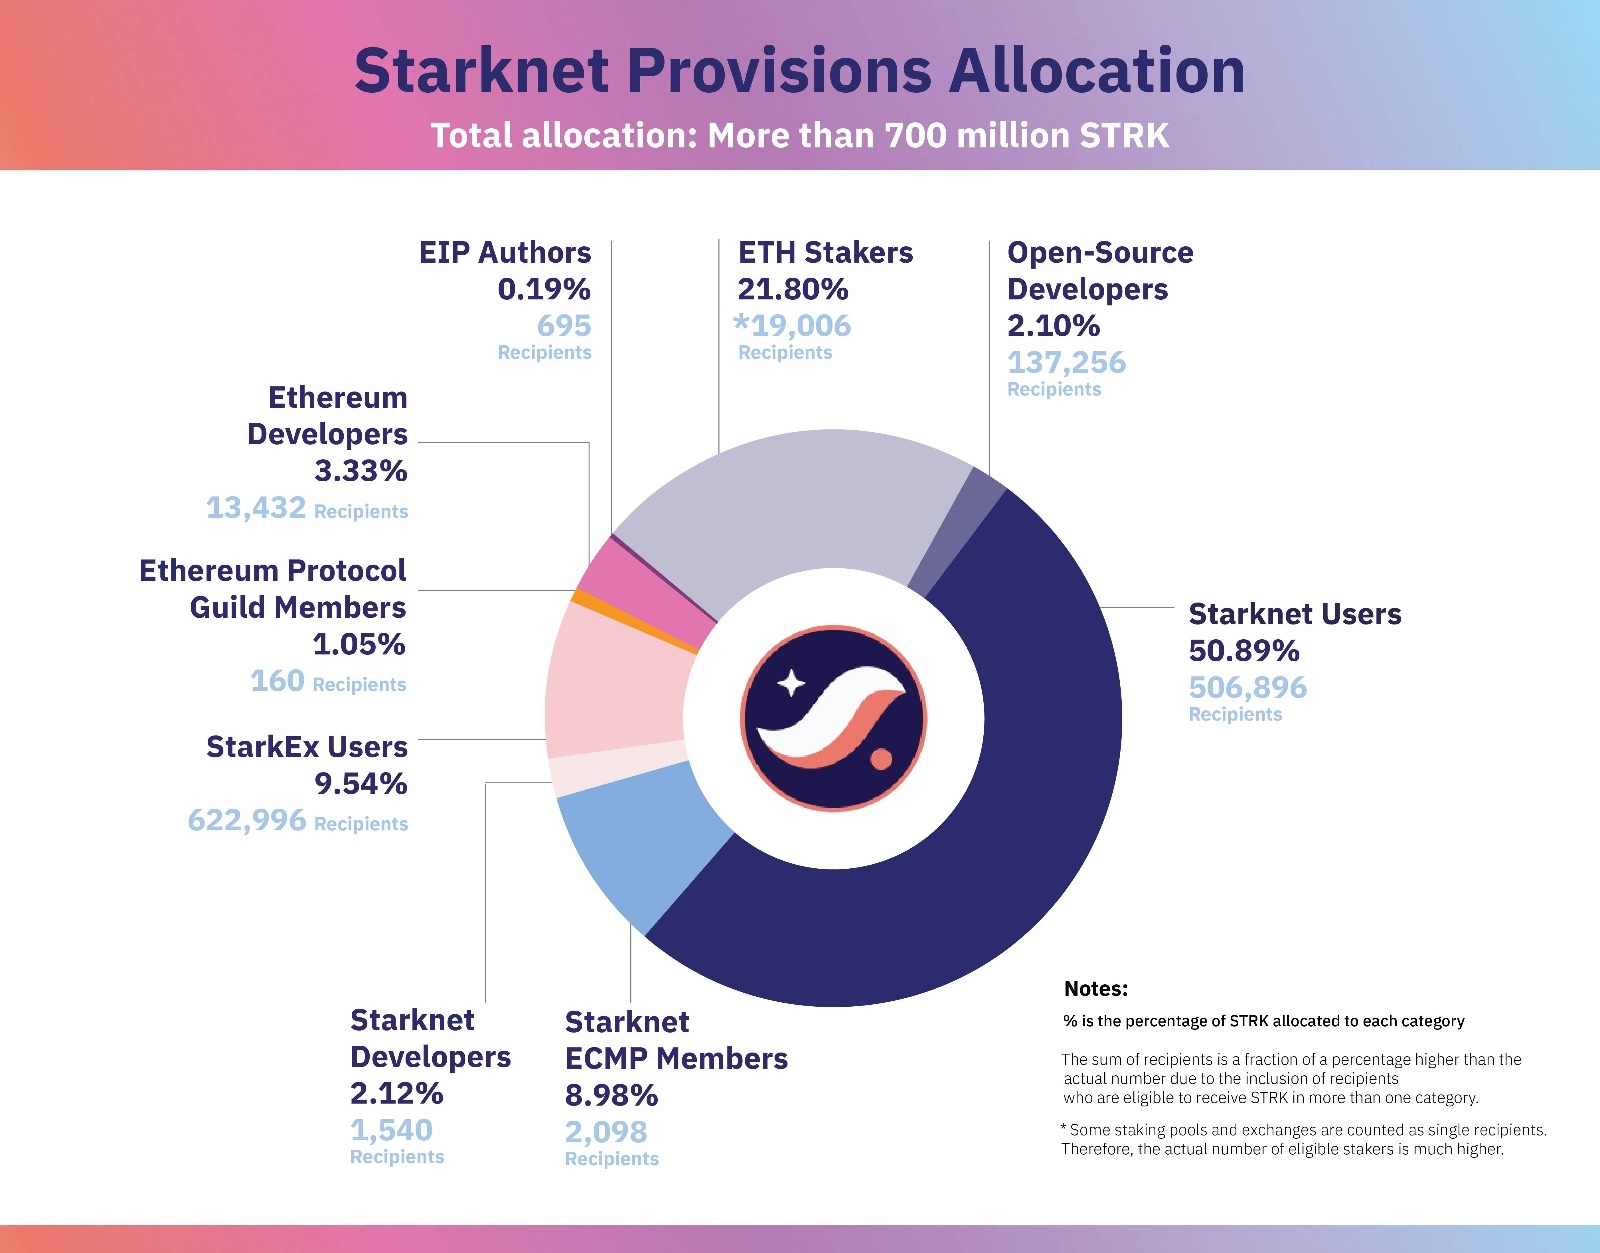 Starknet Provisions Program